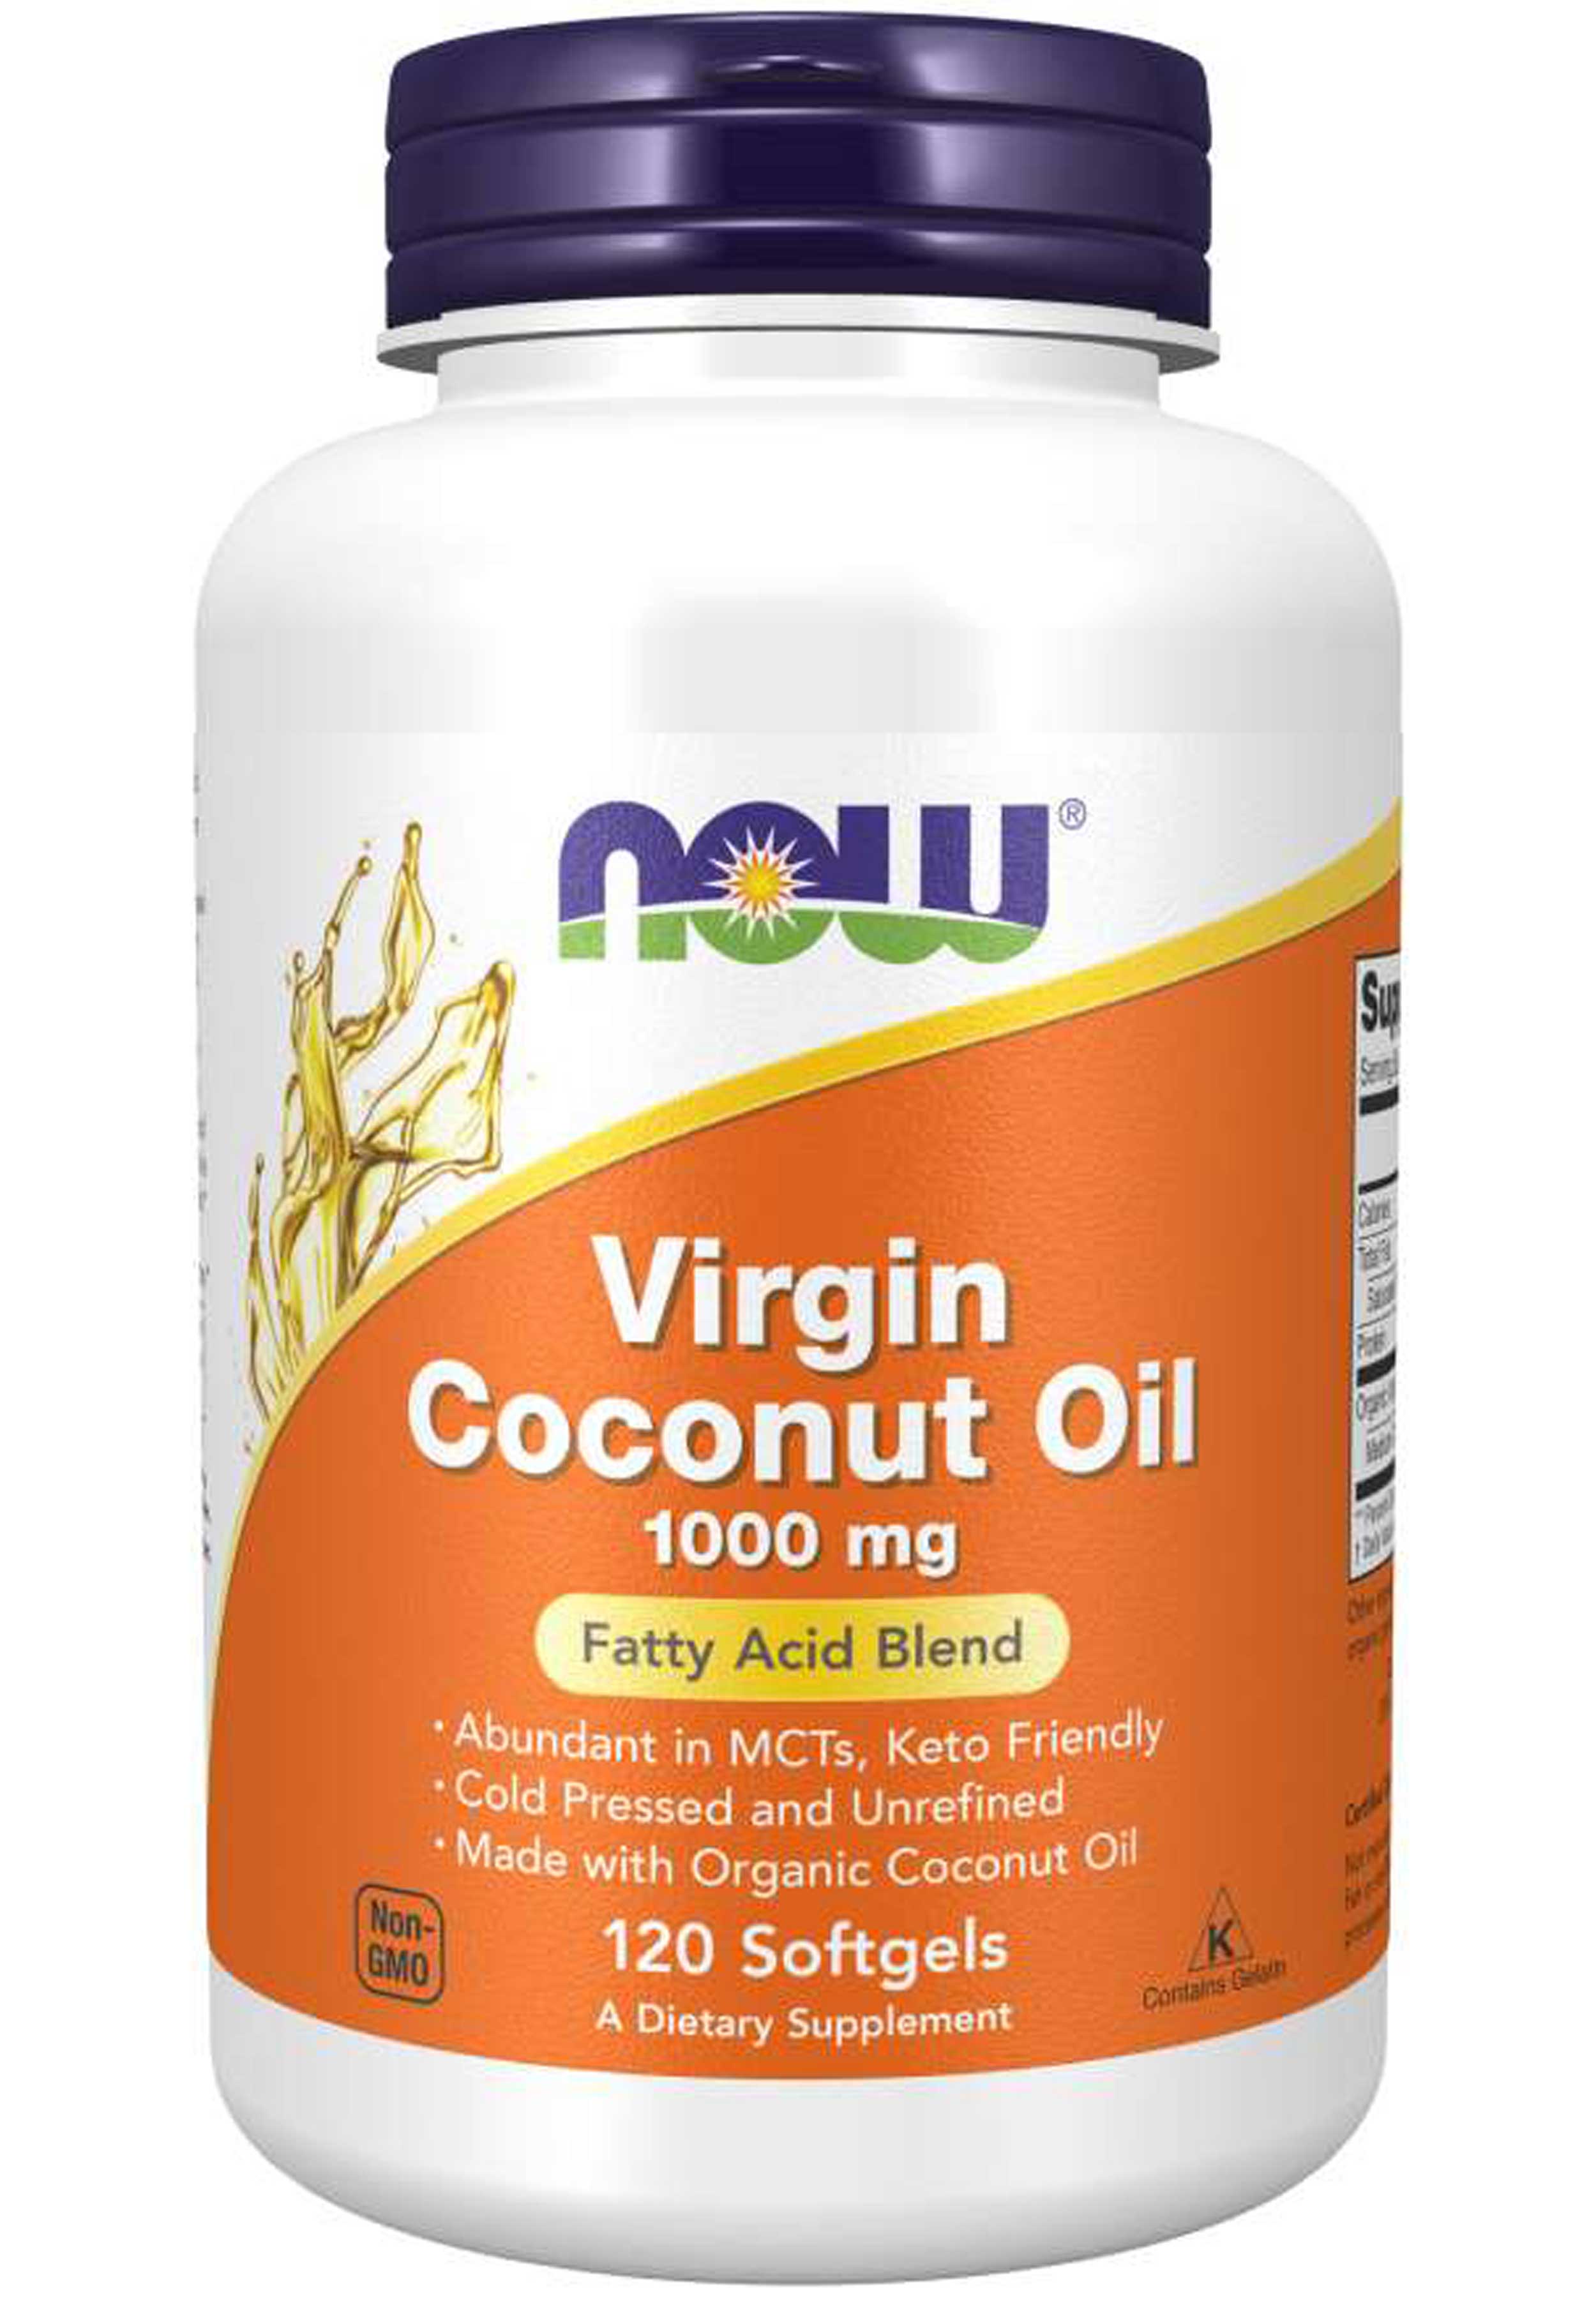 NOW Virgin Coconut Oil 1000 mg